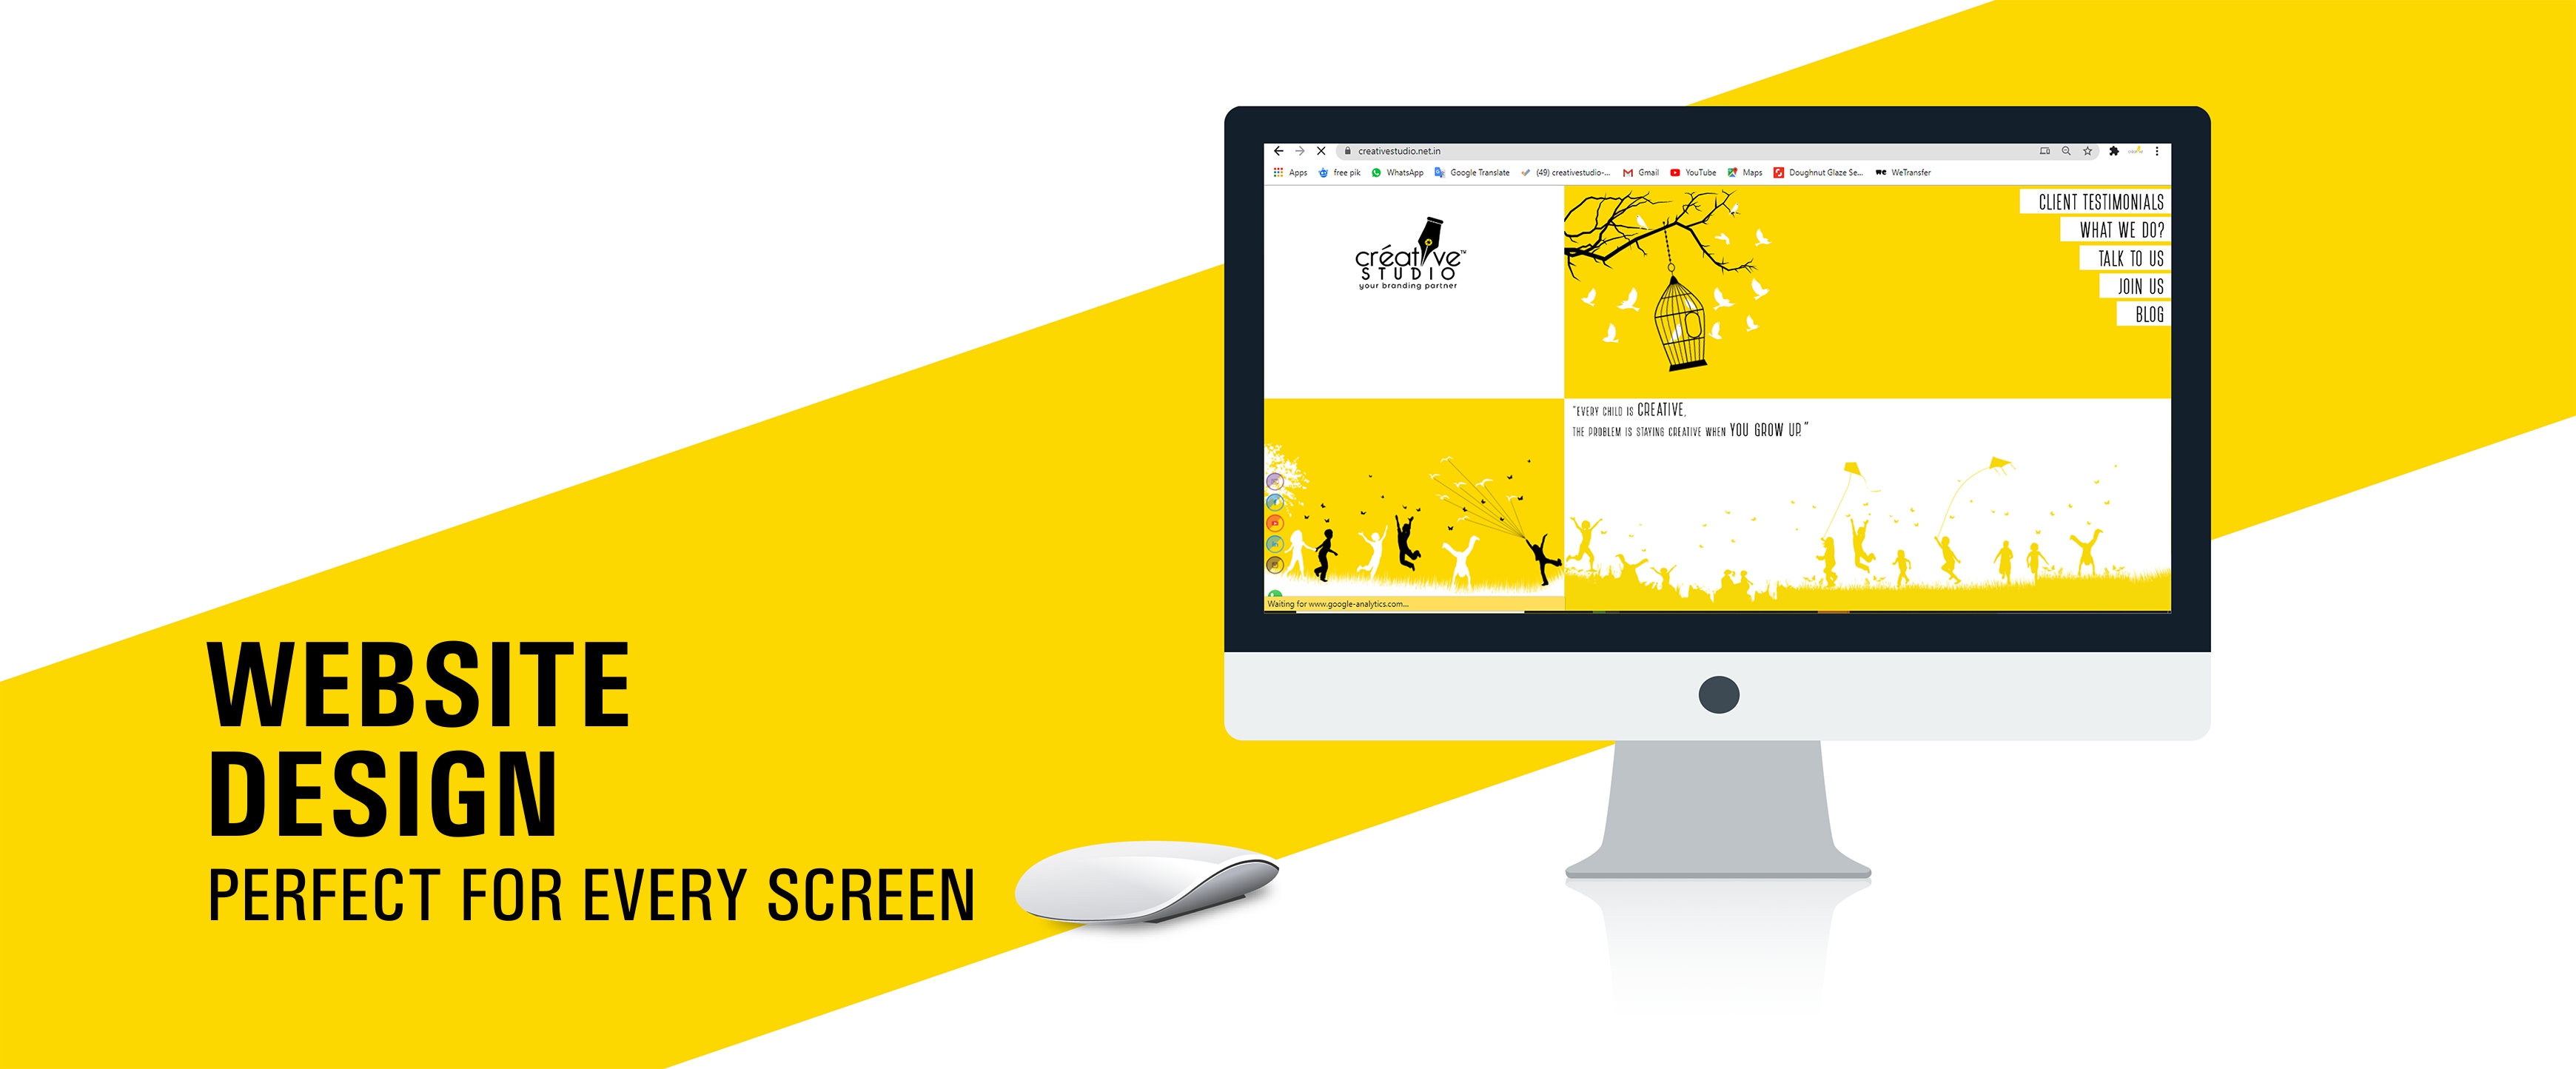 web slider 1 - Website Design Services by Creative Studio